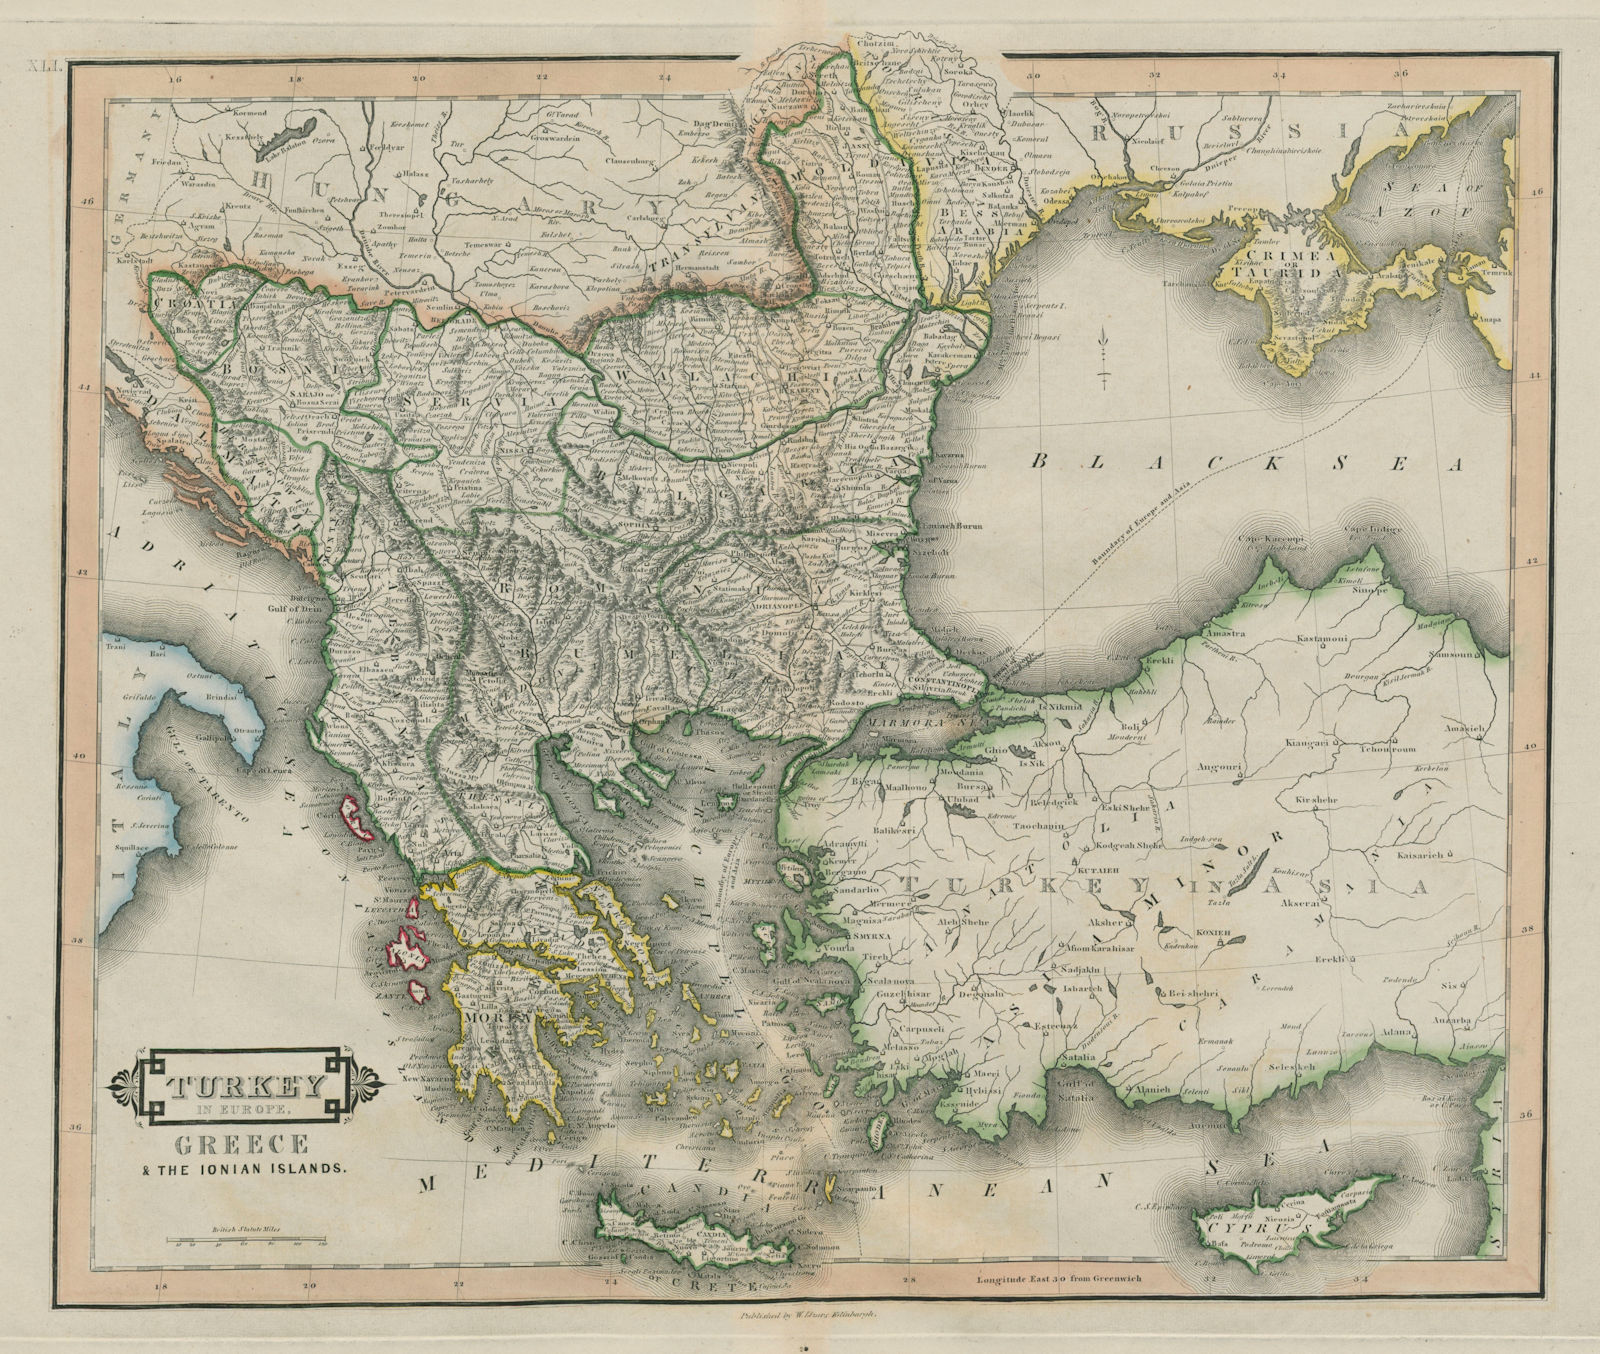 Turkey in Europe, Greece & the Ionian Islands. Balkans & Aegean. LIZARS 1842 map